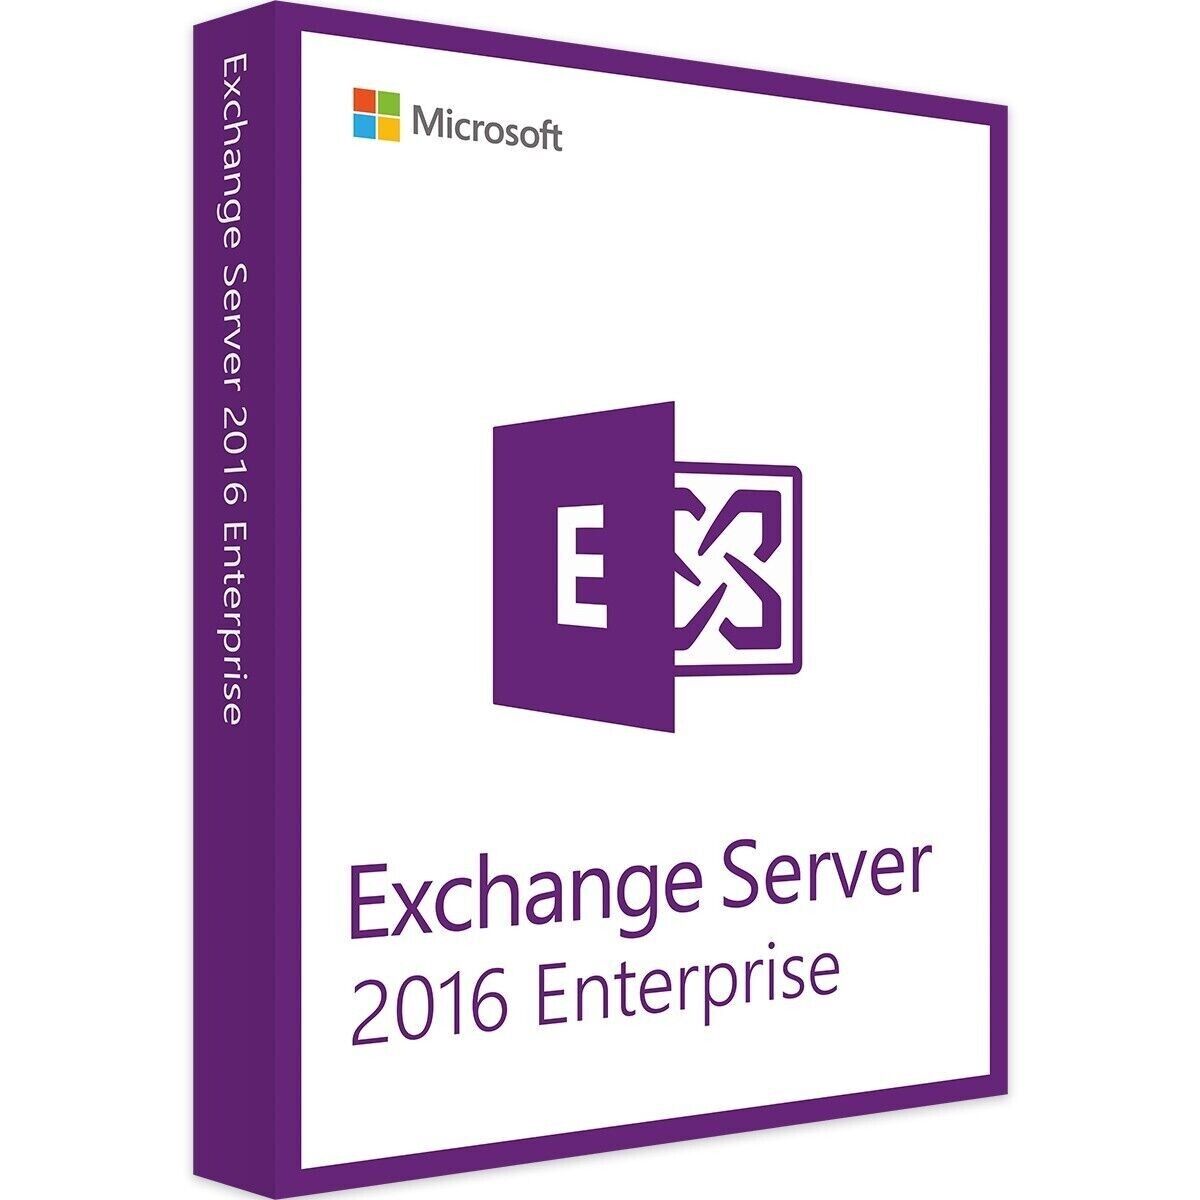 Microsoft Exchange Server 2016 Enterprise w Retail 100 CALs, New, Multilanguage